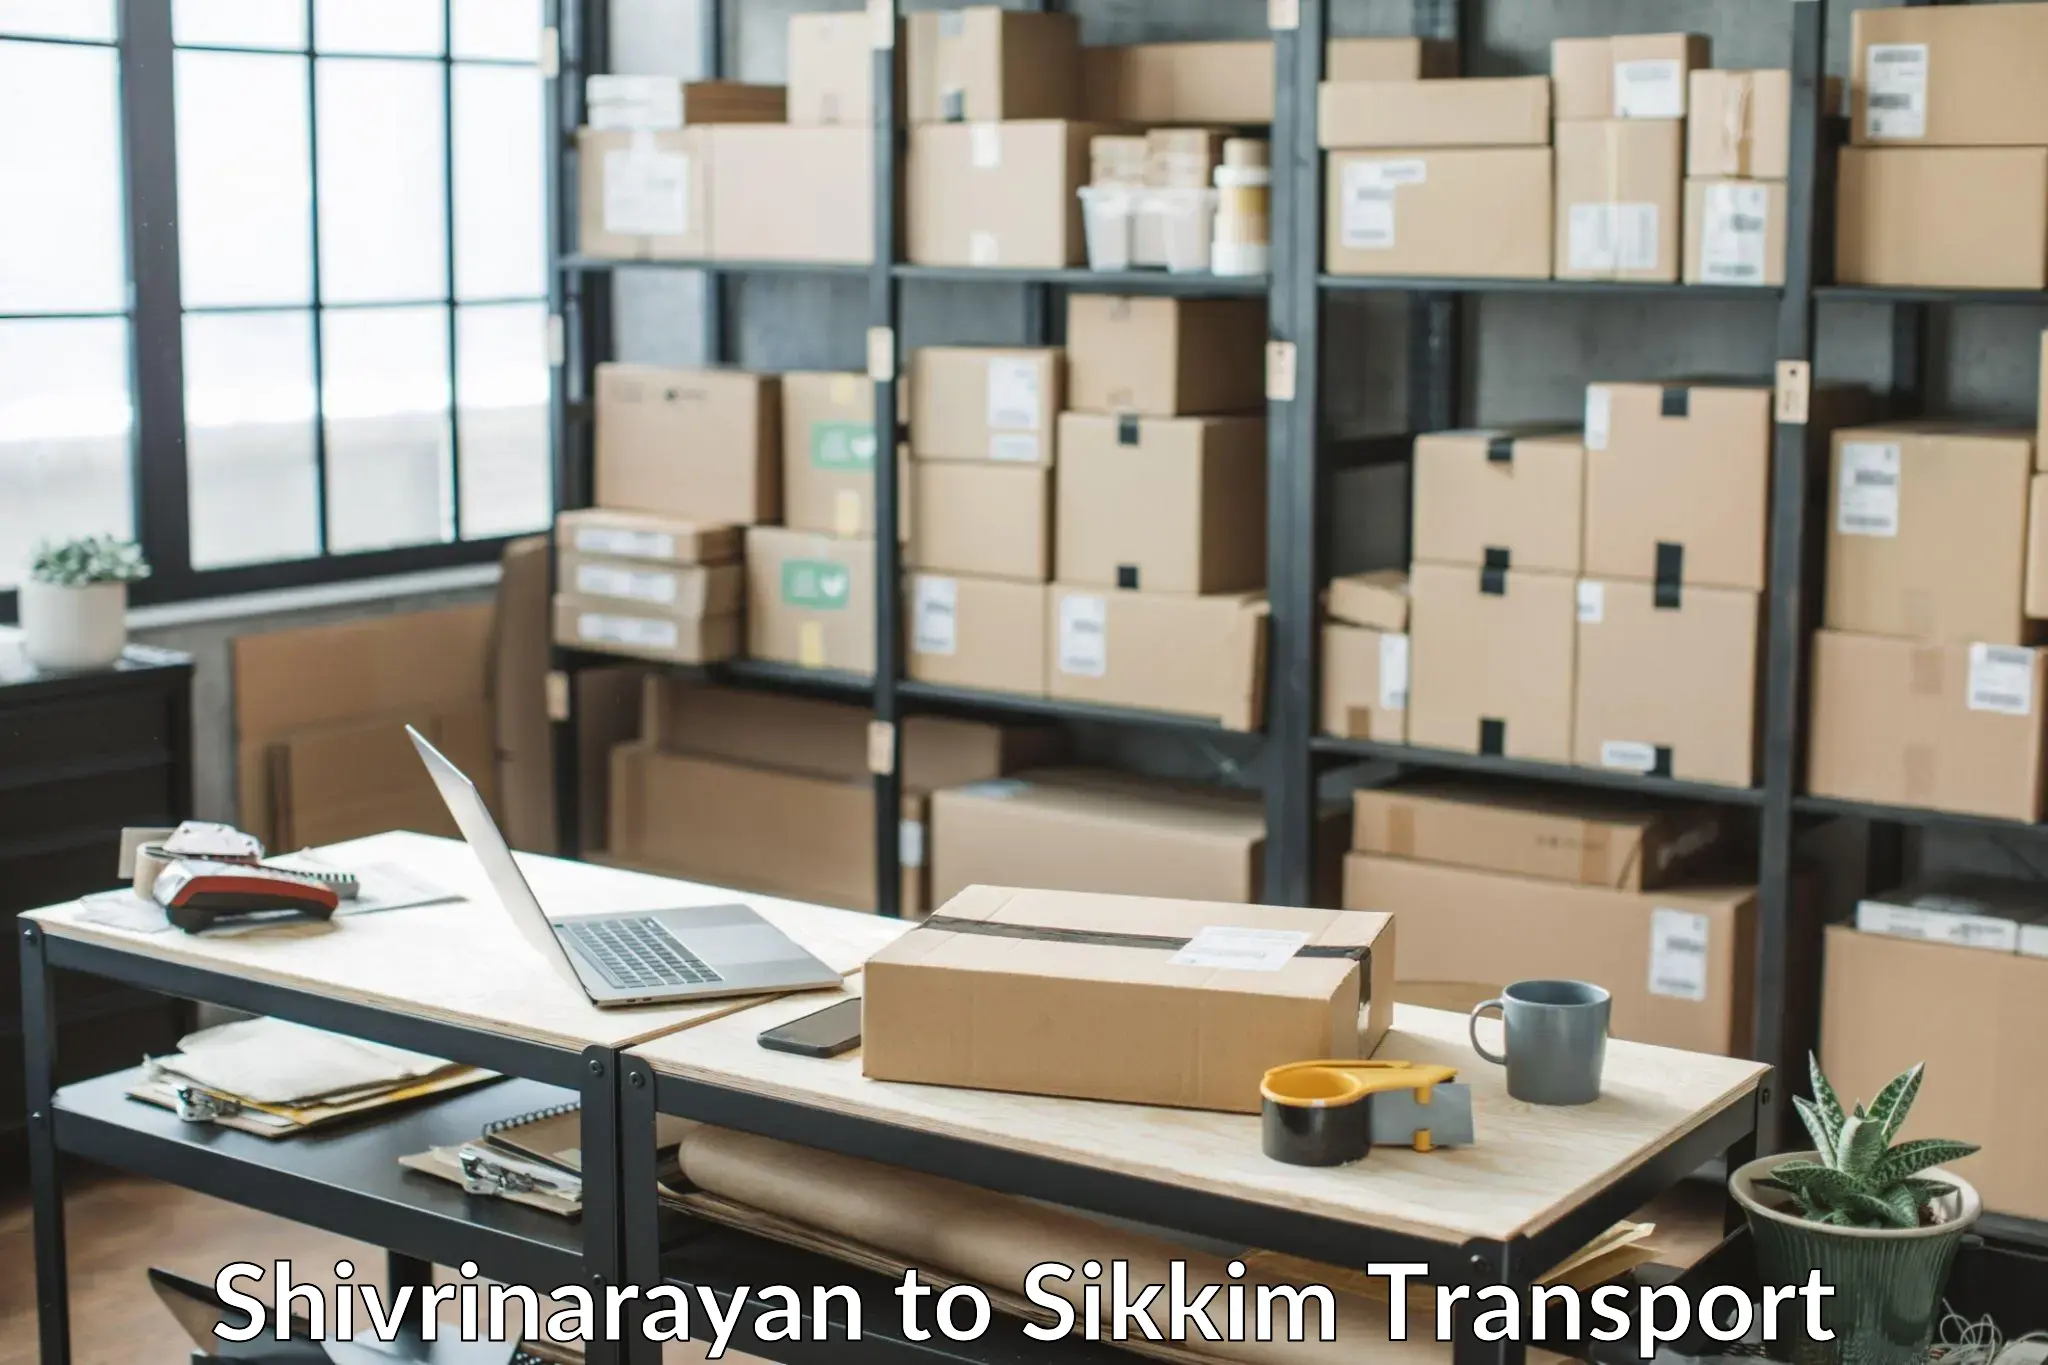 Bike shipping service Shivrinarayan to Pelling